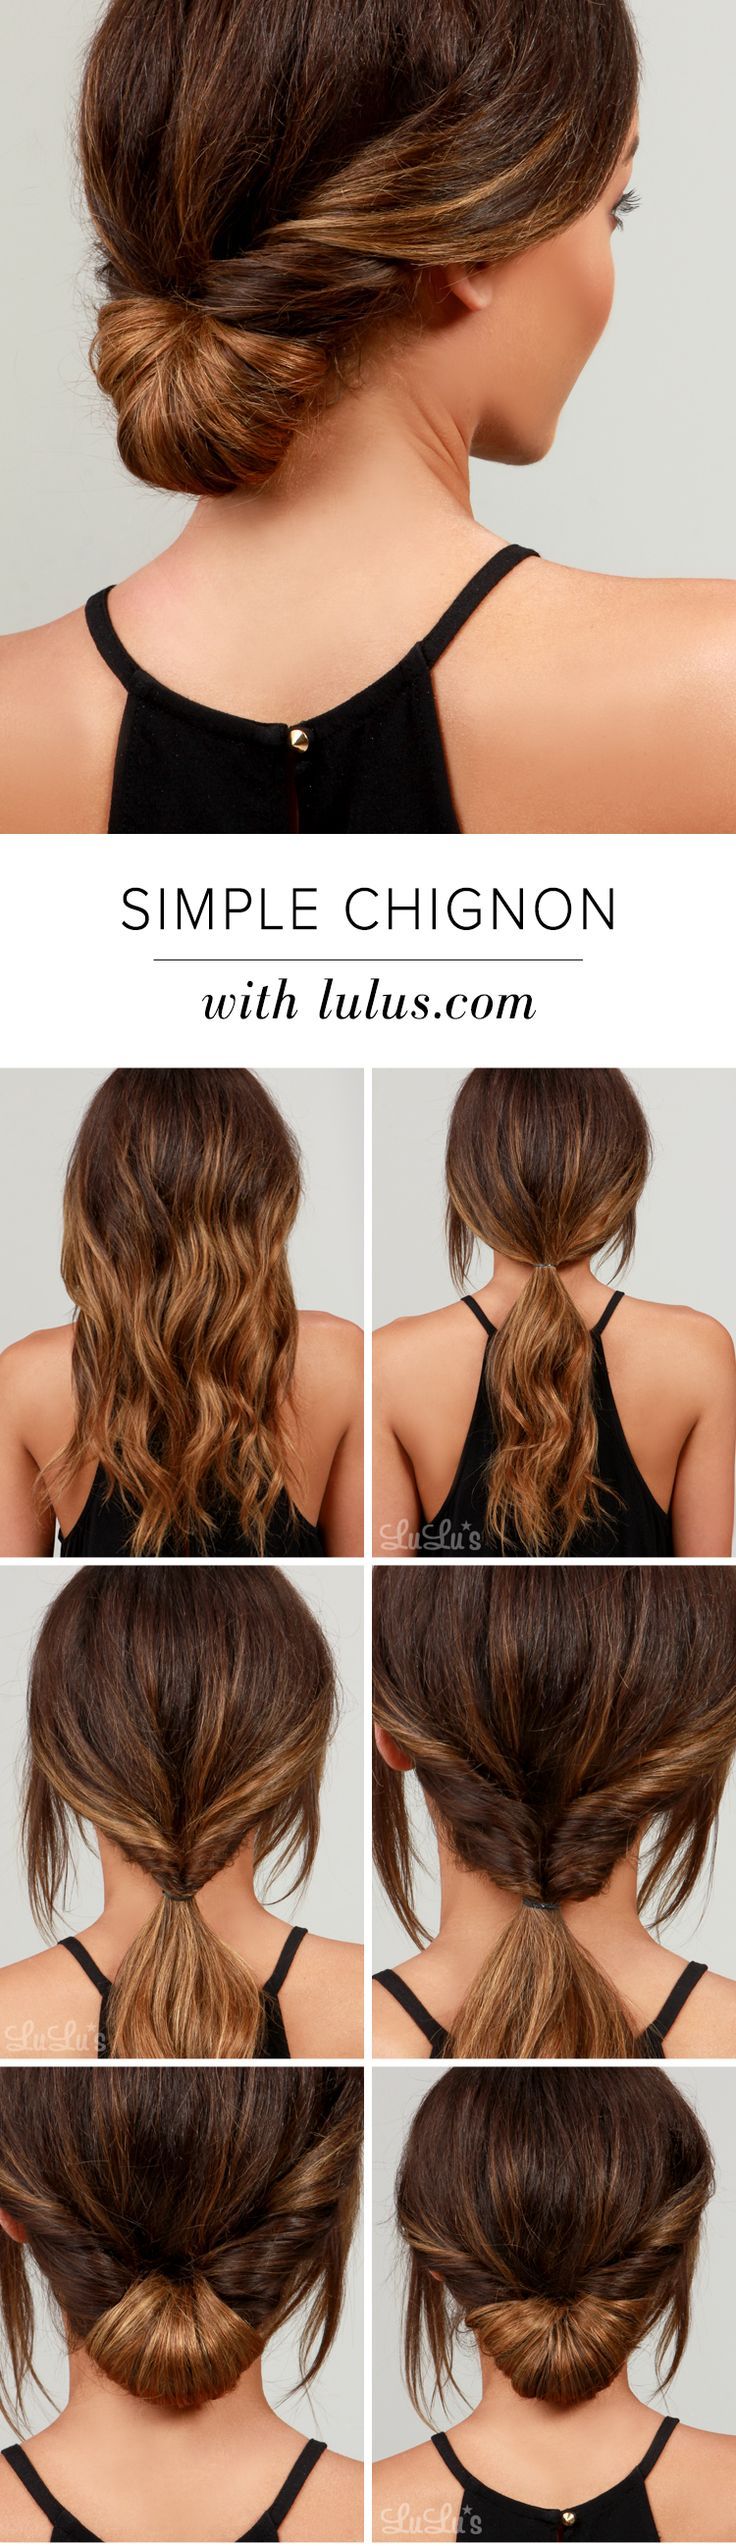 Lulus How-To: Simple Chignon Hair Tutorial